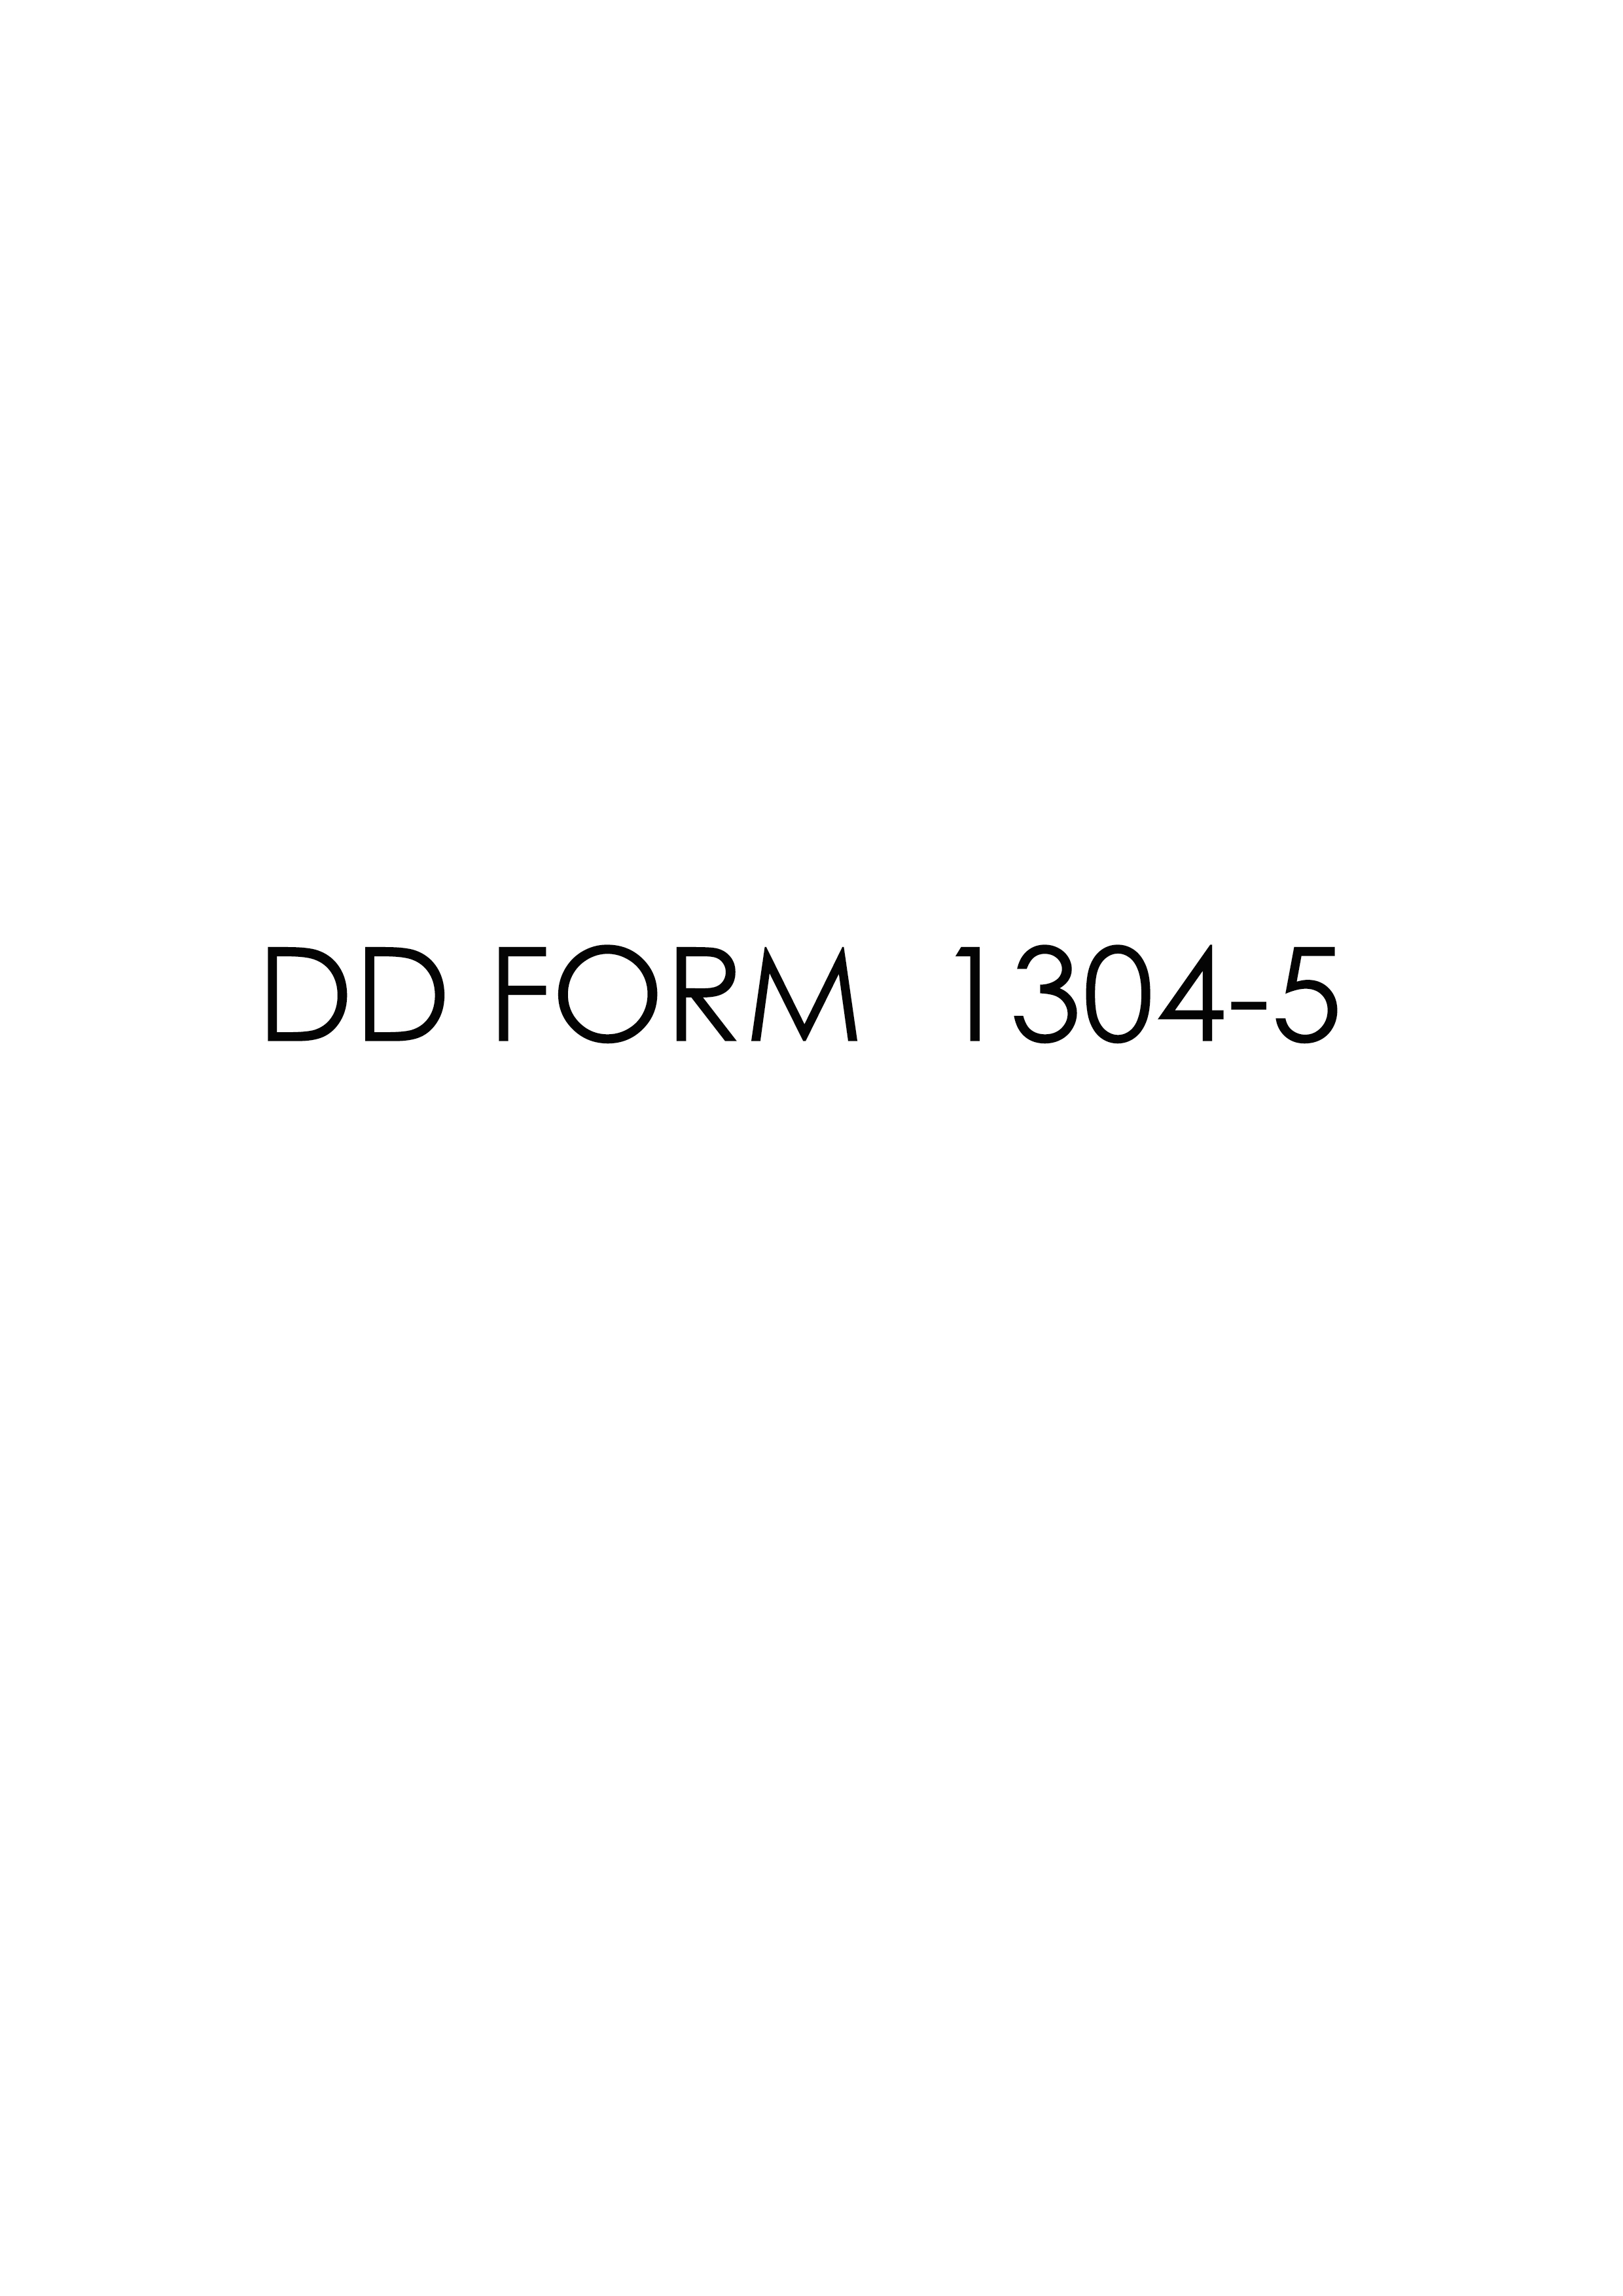 Download dd 1304-5 Form